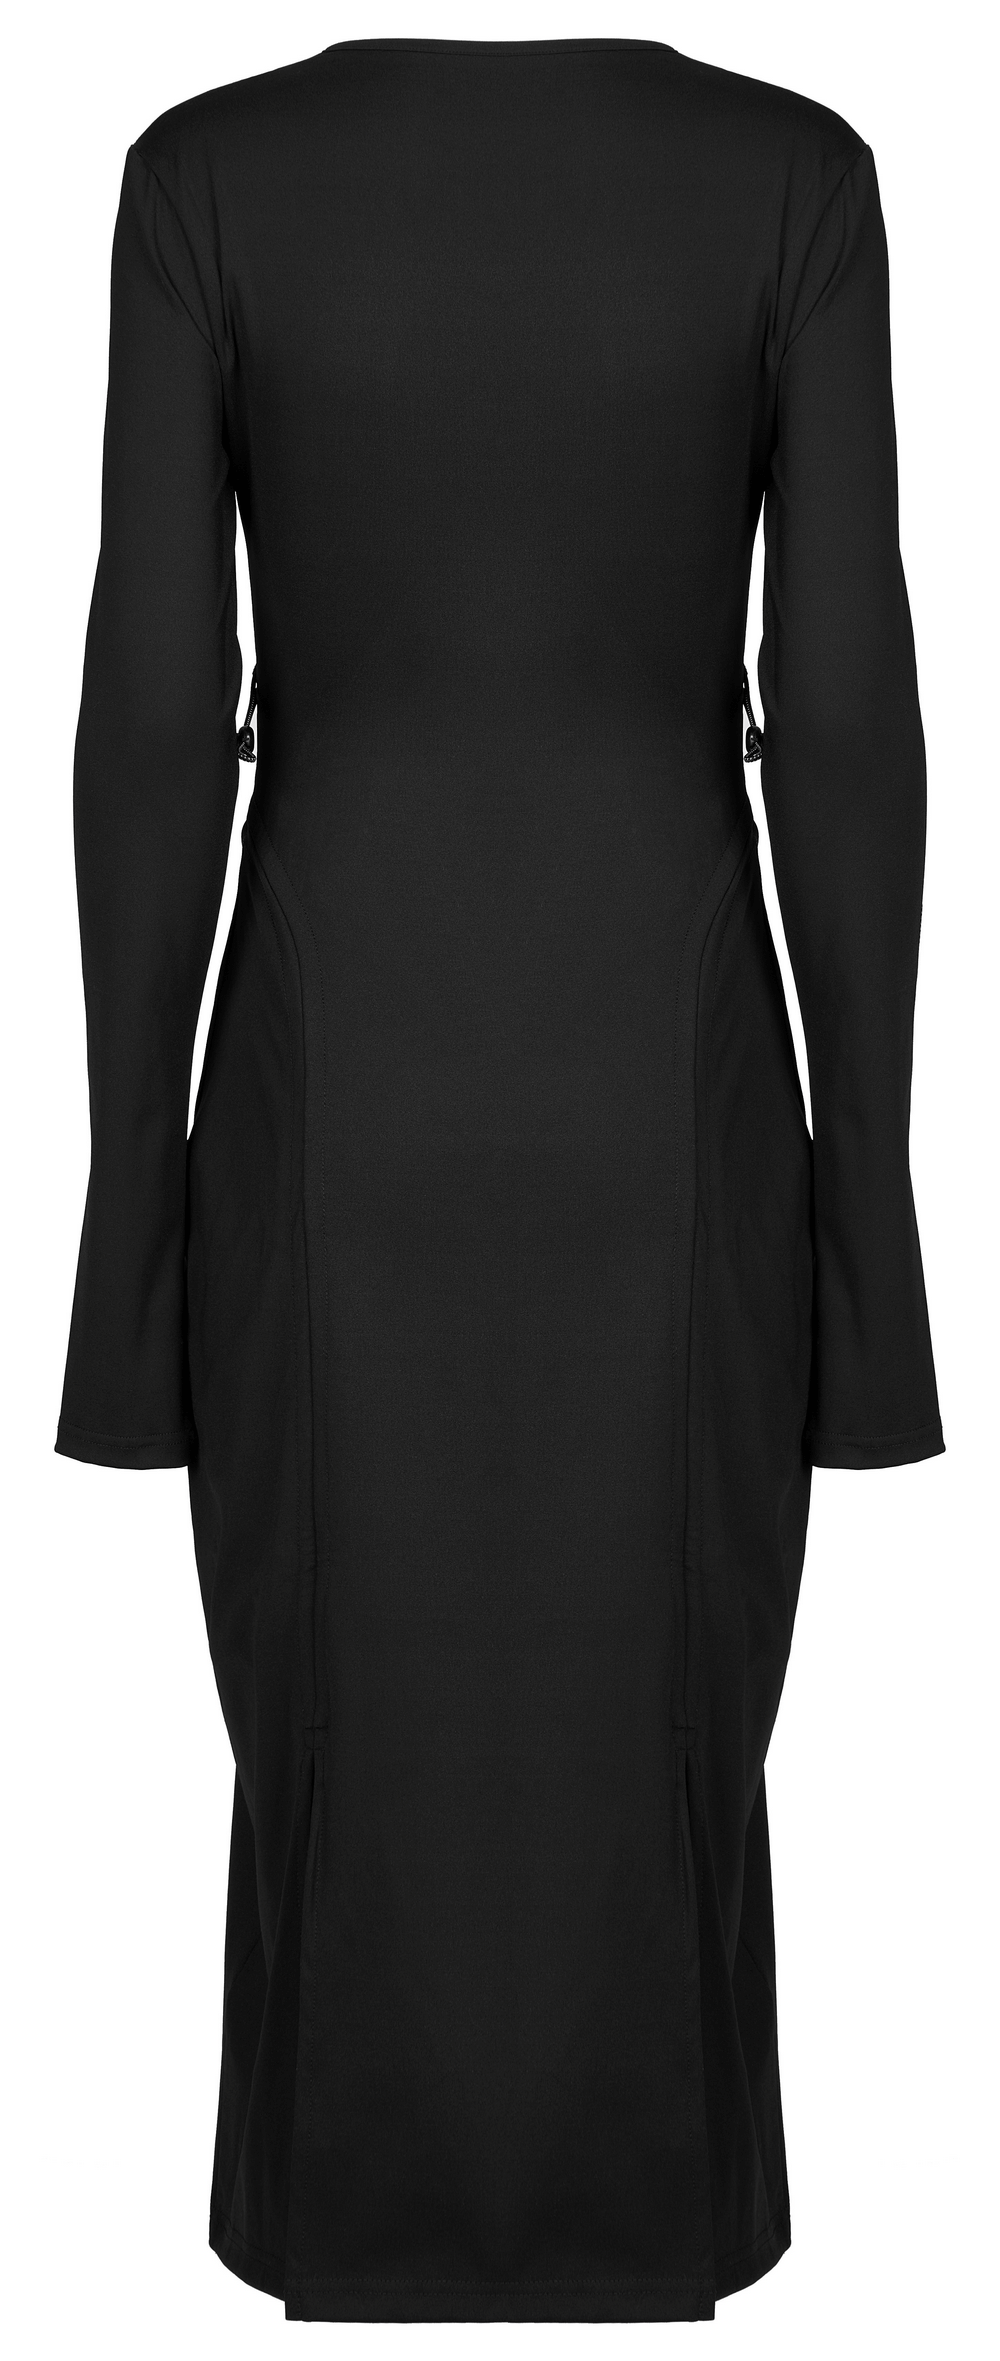 Adjustable Black Midi Dress with Reflective Detail - HARD'N'HEAVY